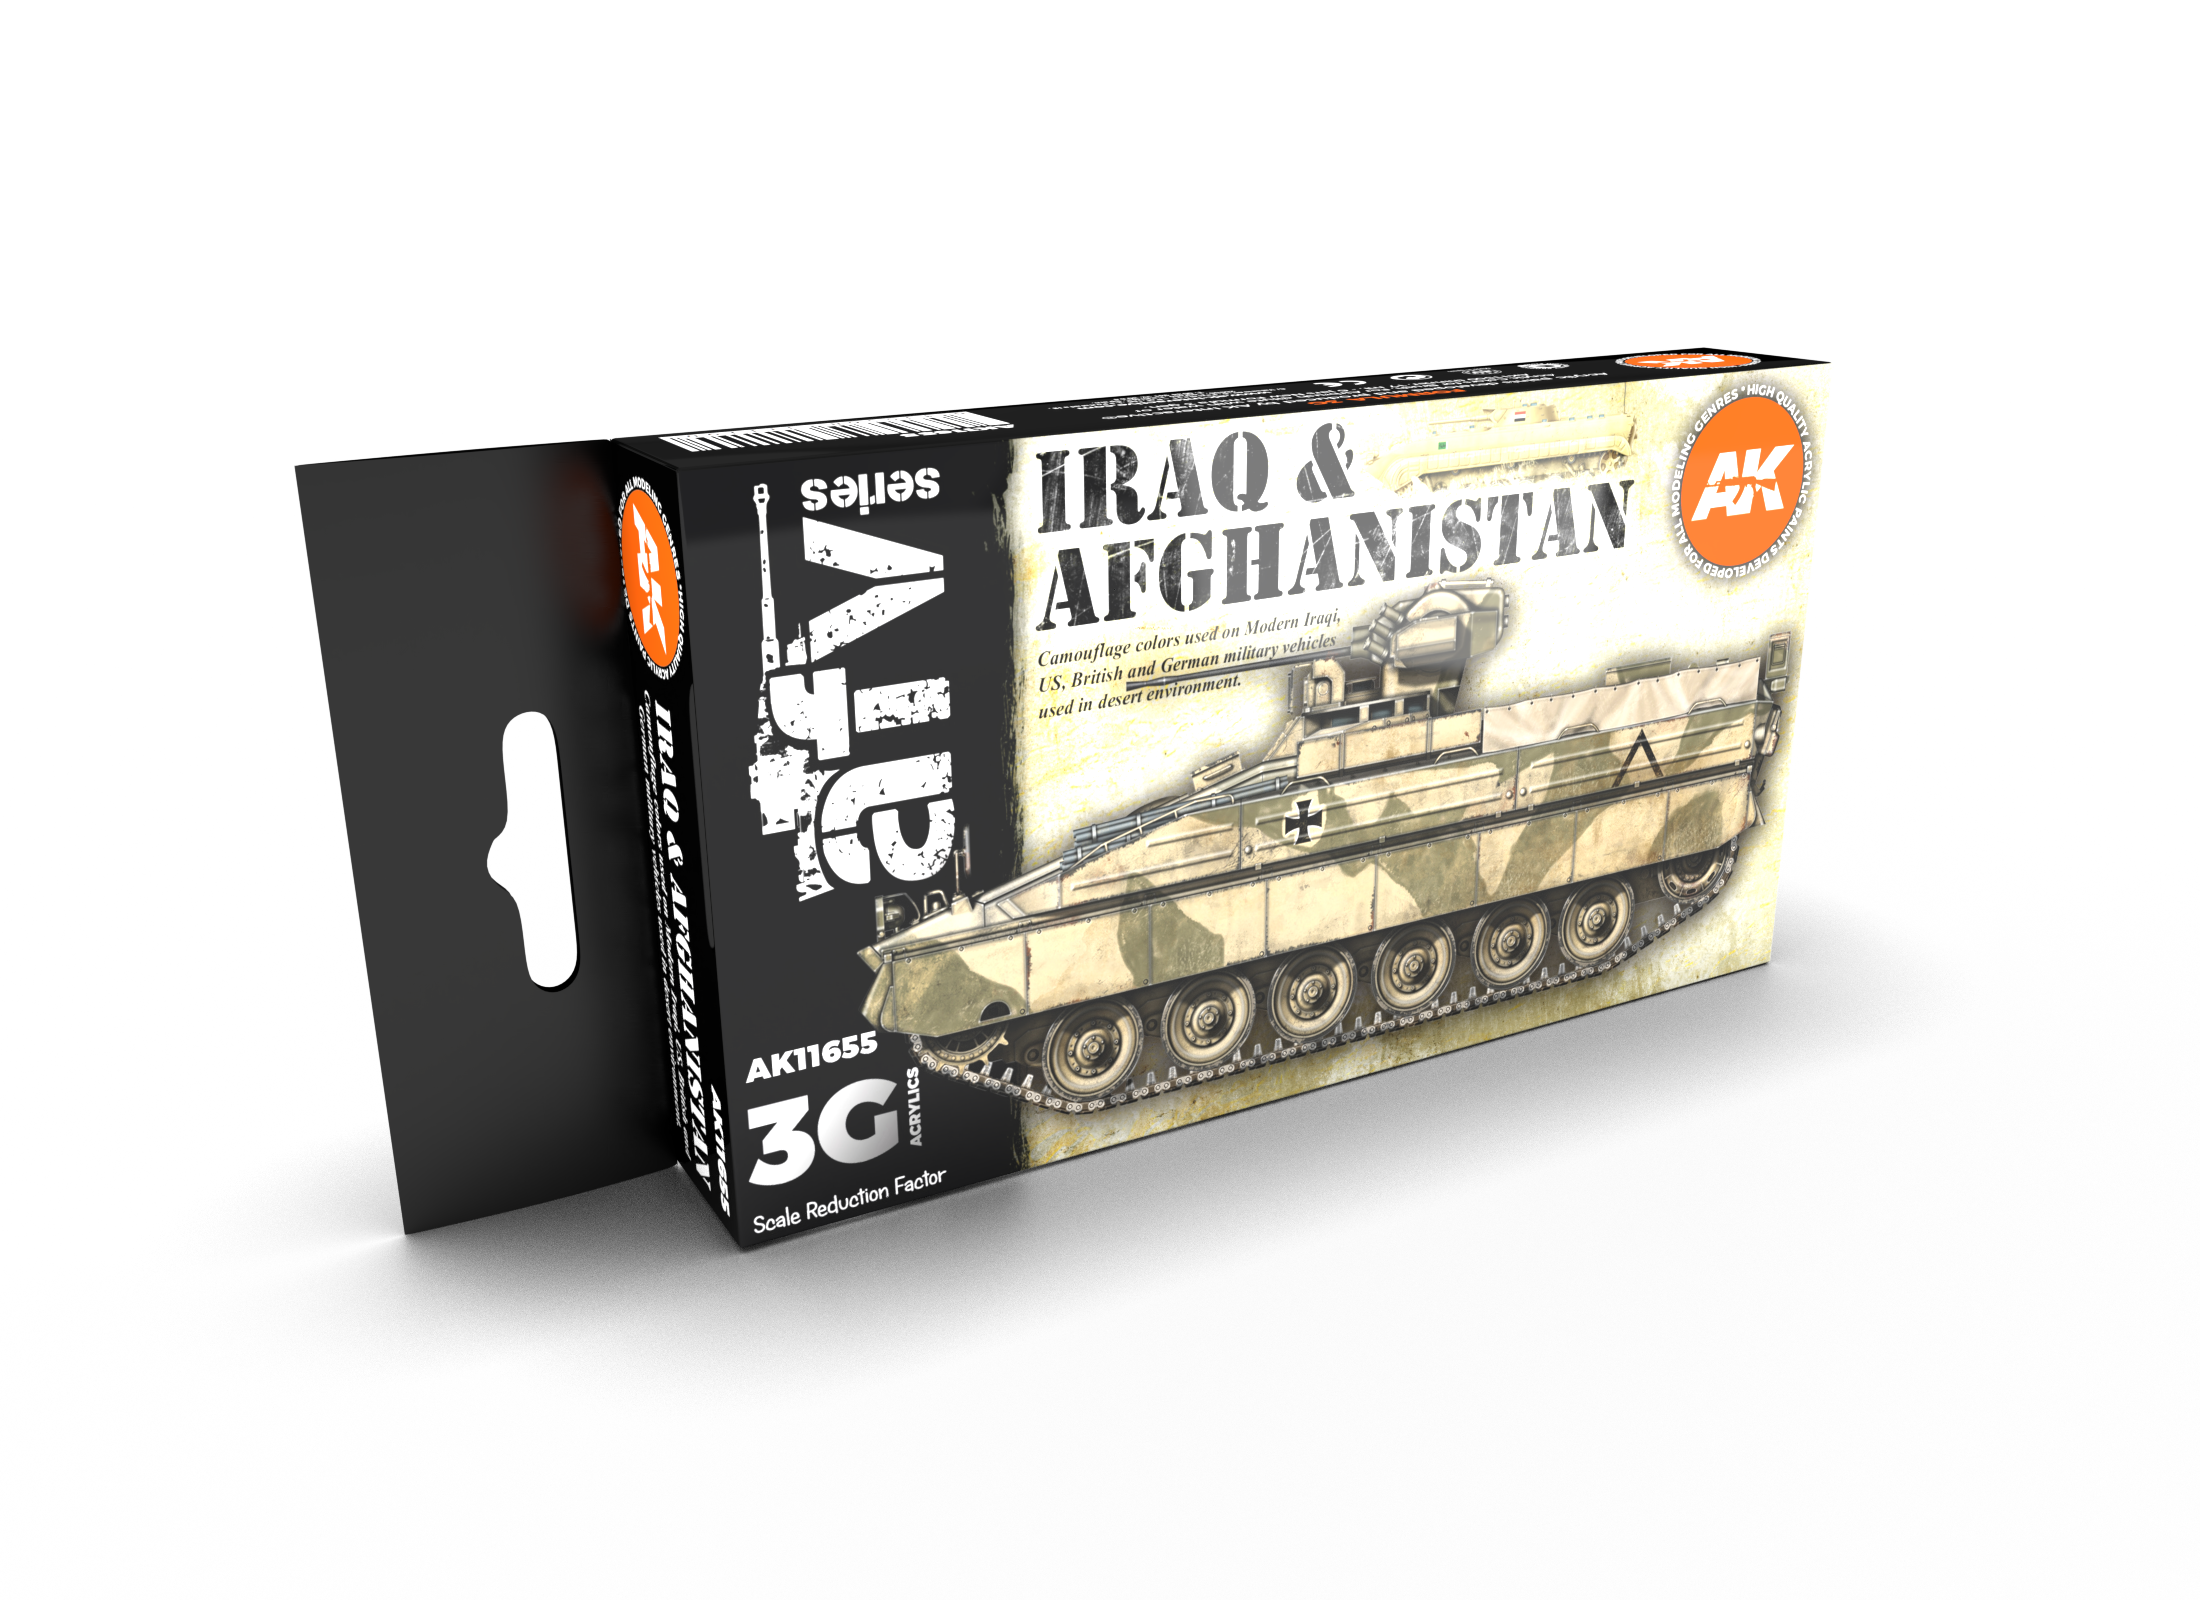 AK Interactive 3rdGen Iraq & Afghanistan